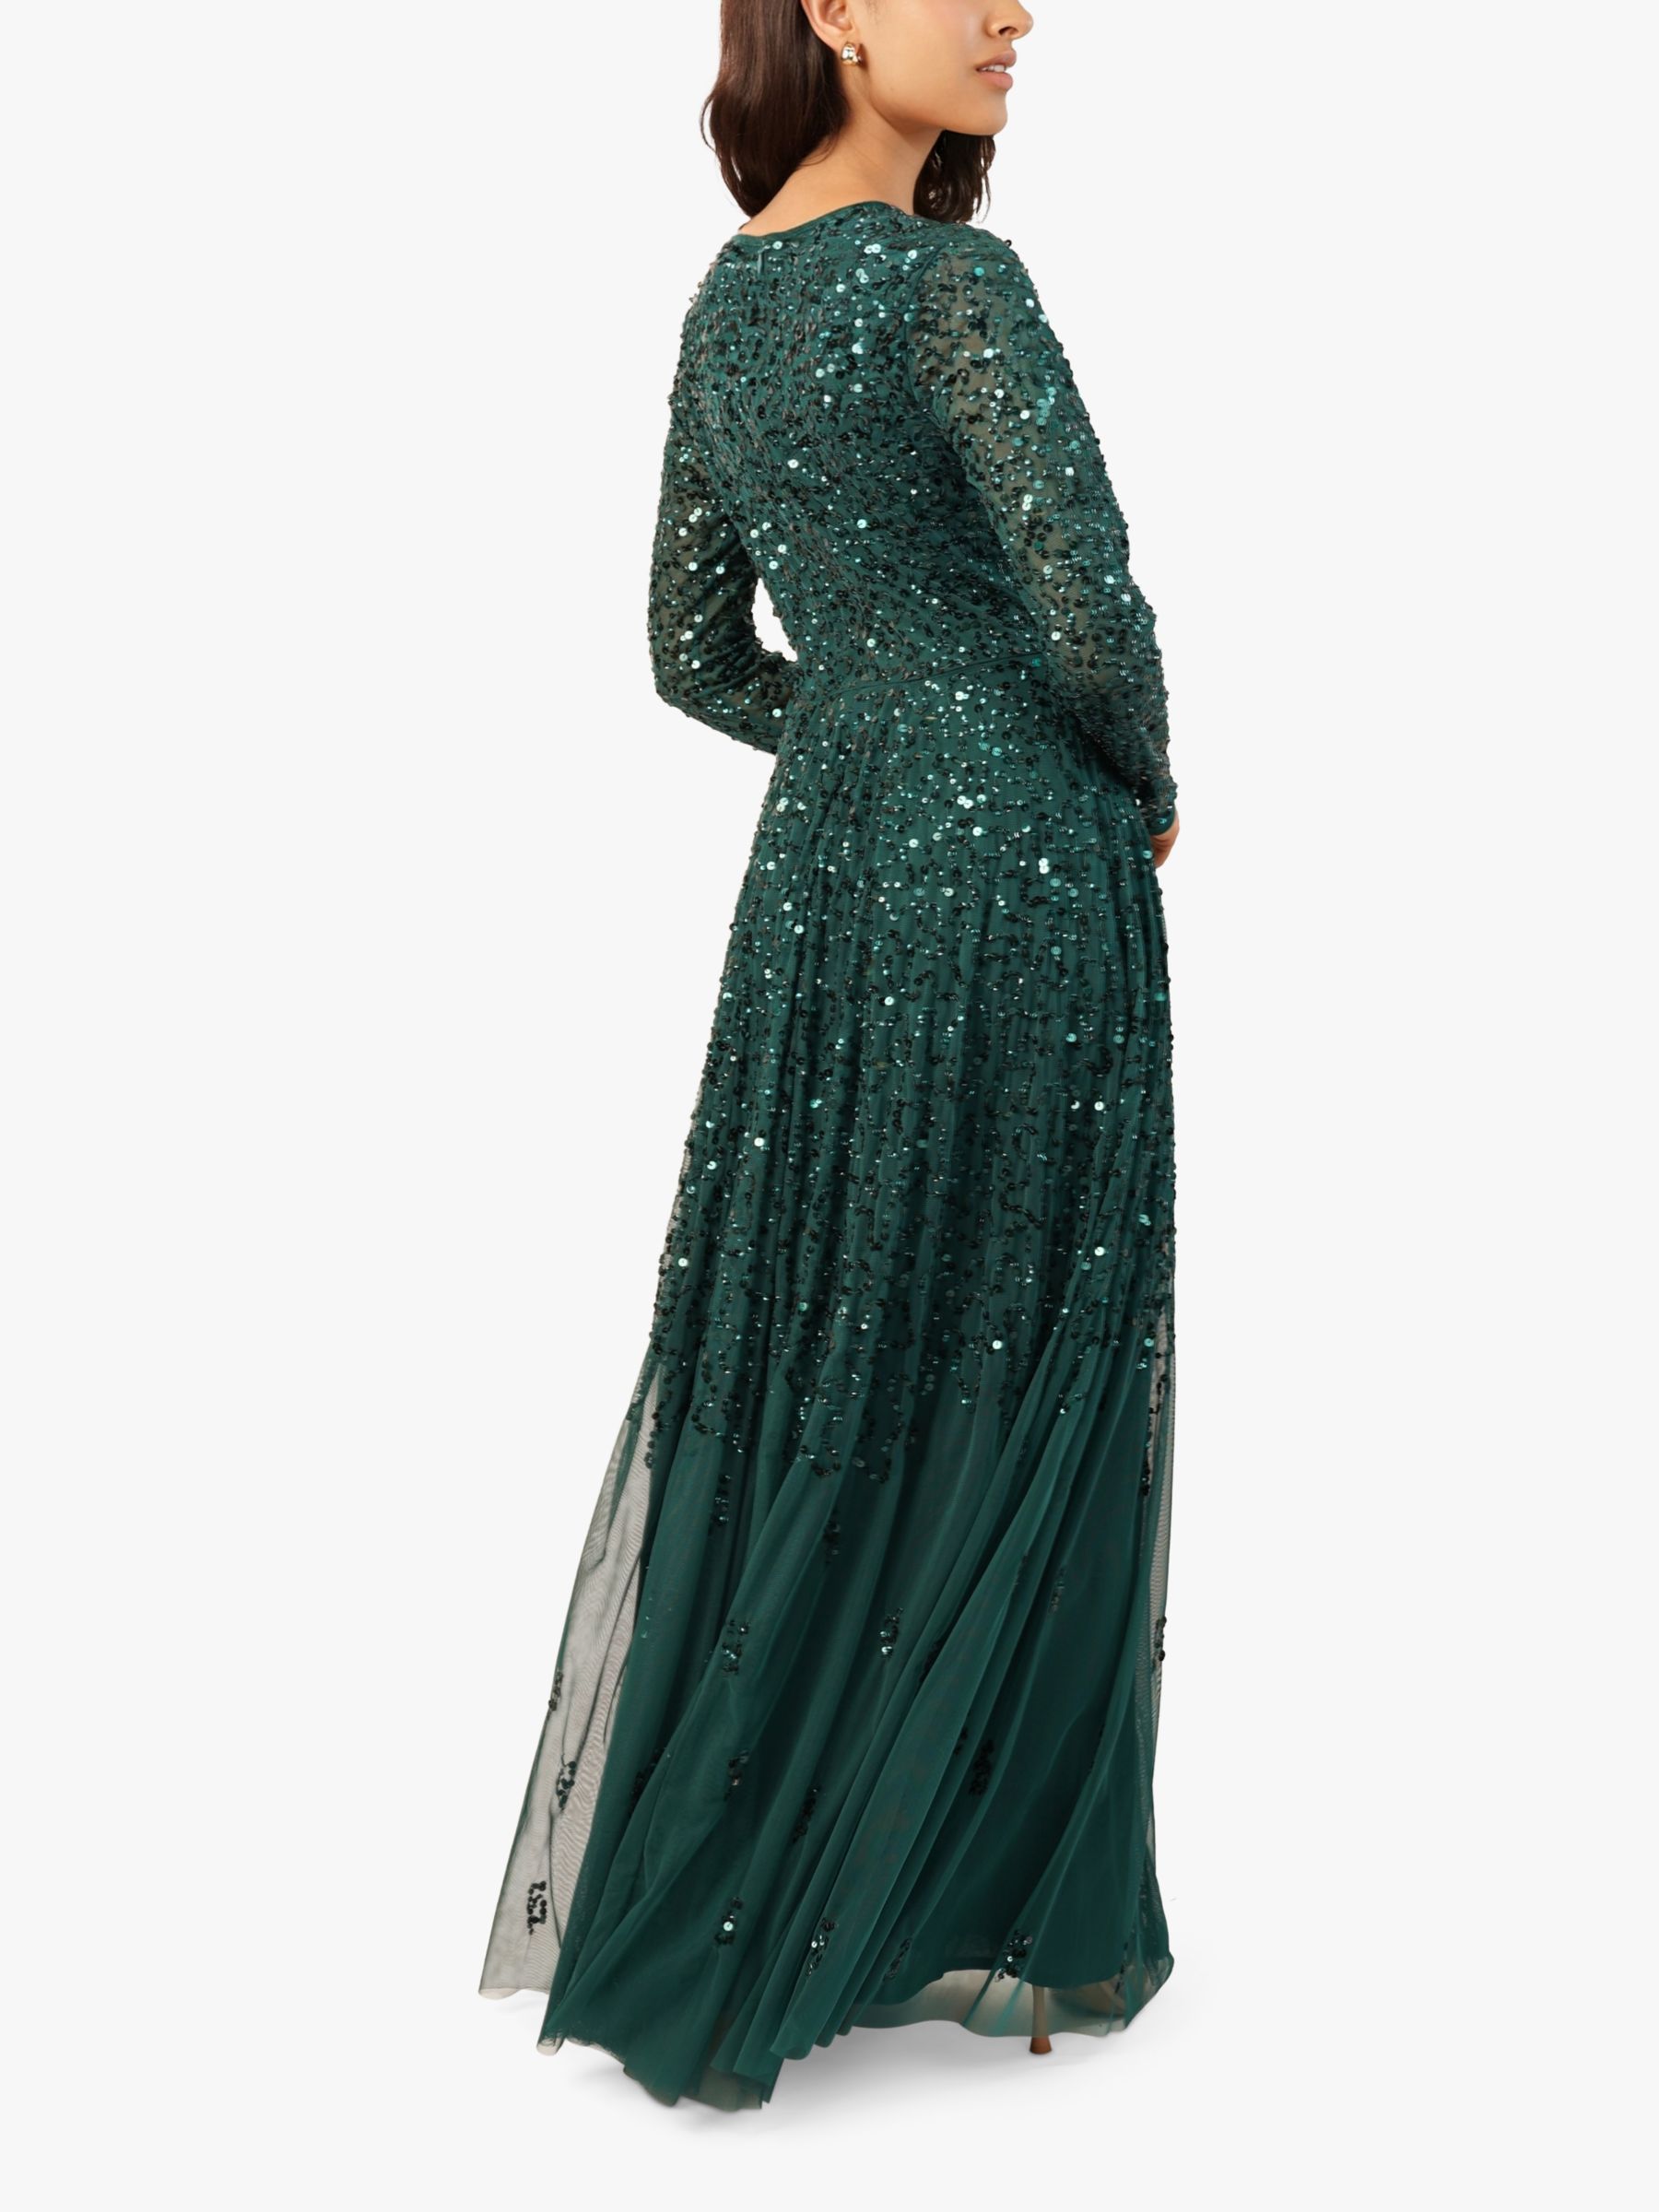 Lace & Beads Sila Embellished Maxi Dress, Emerald Green at John Lewis ...